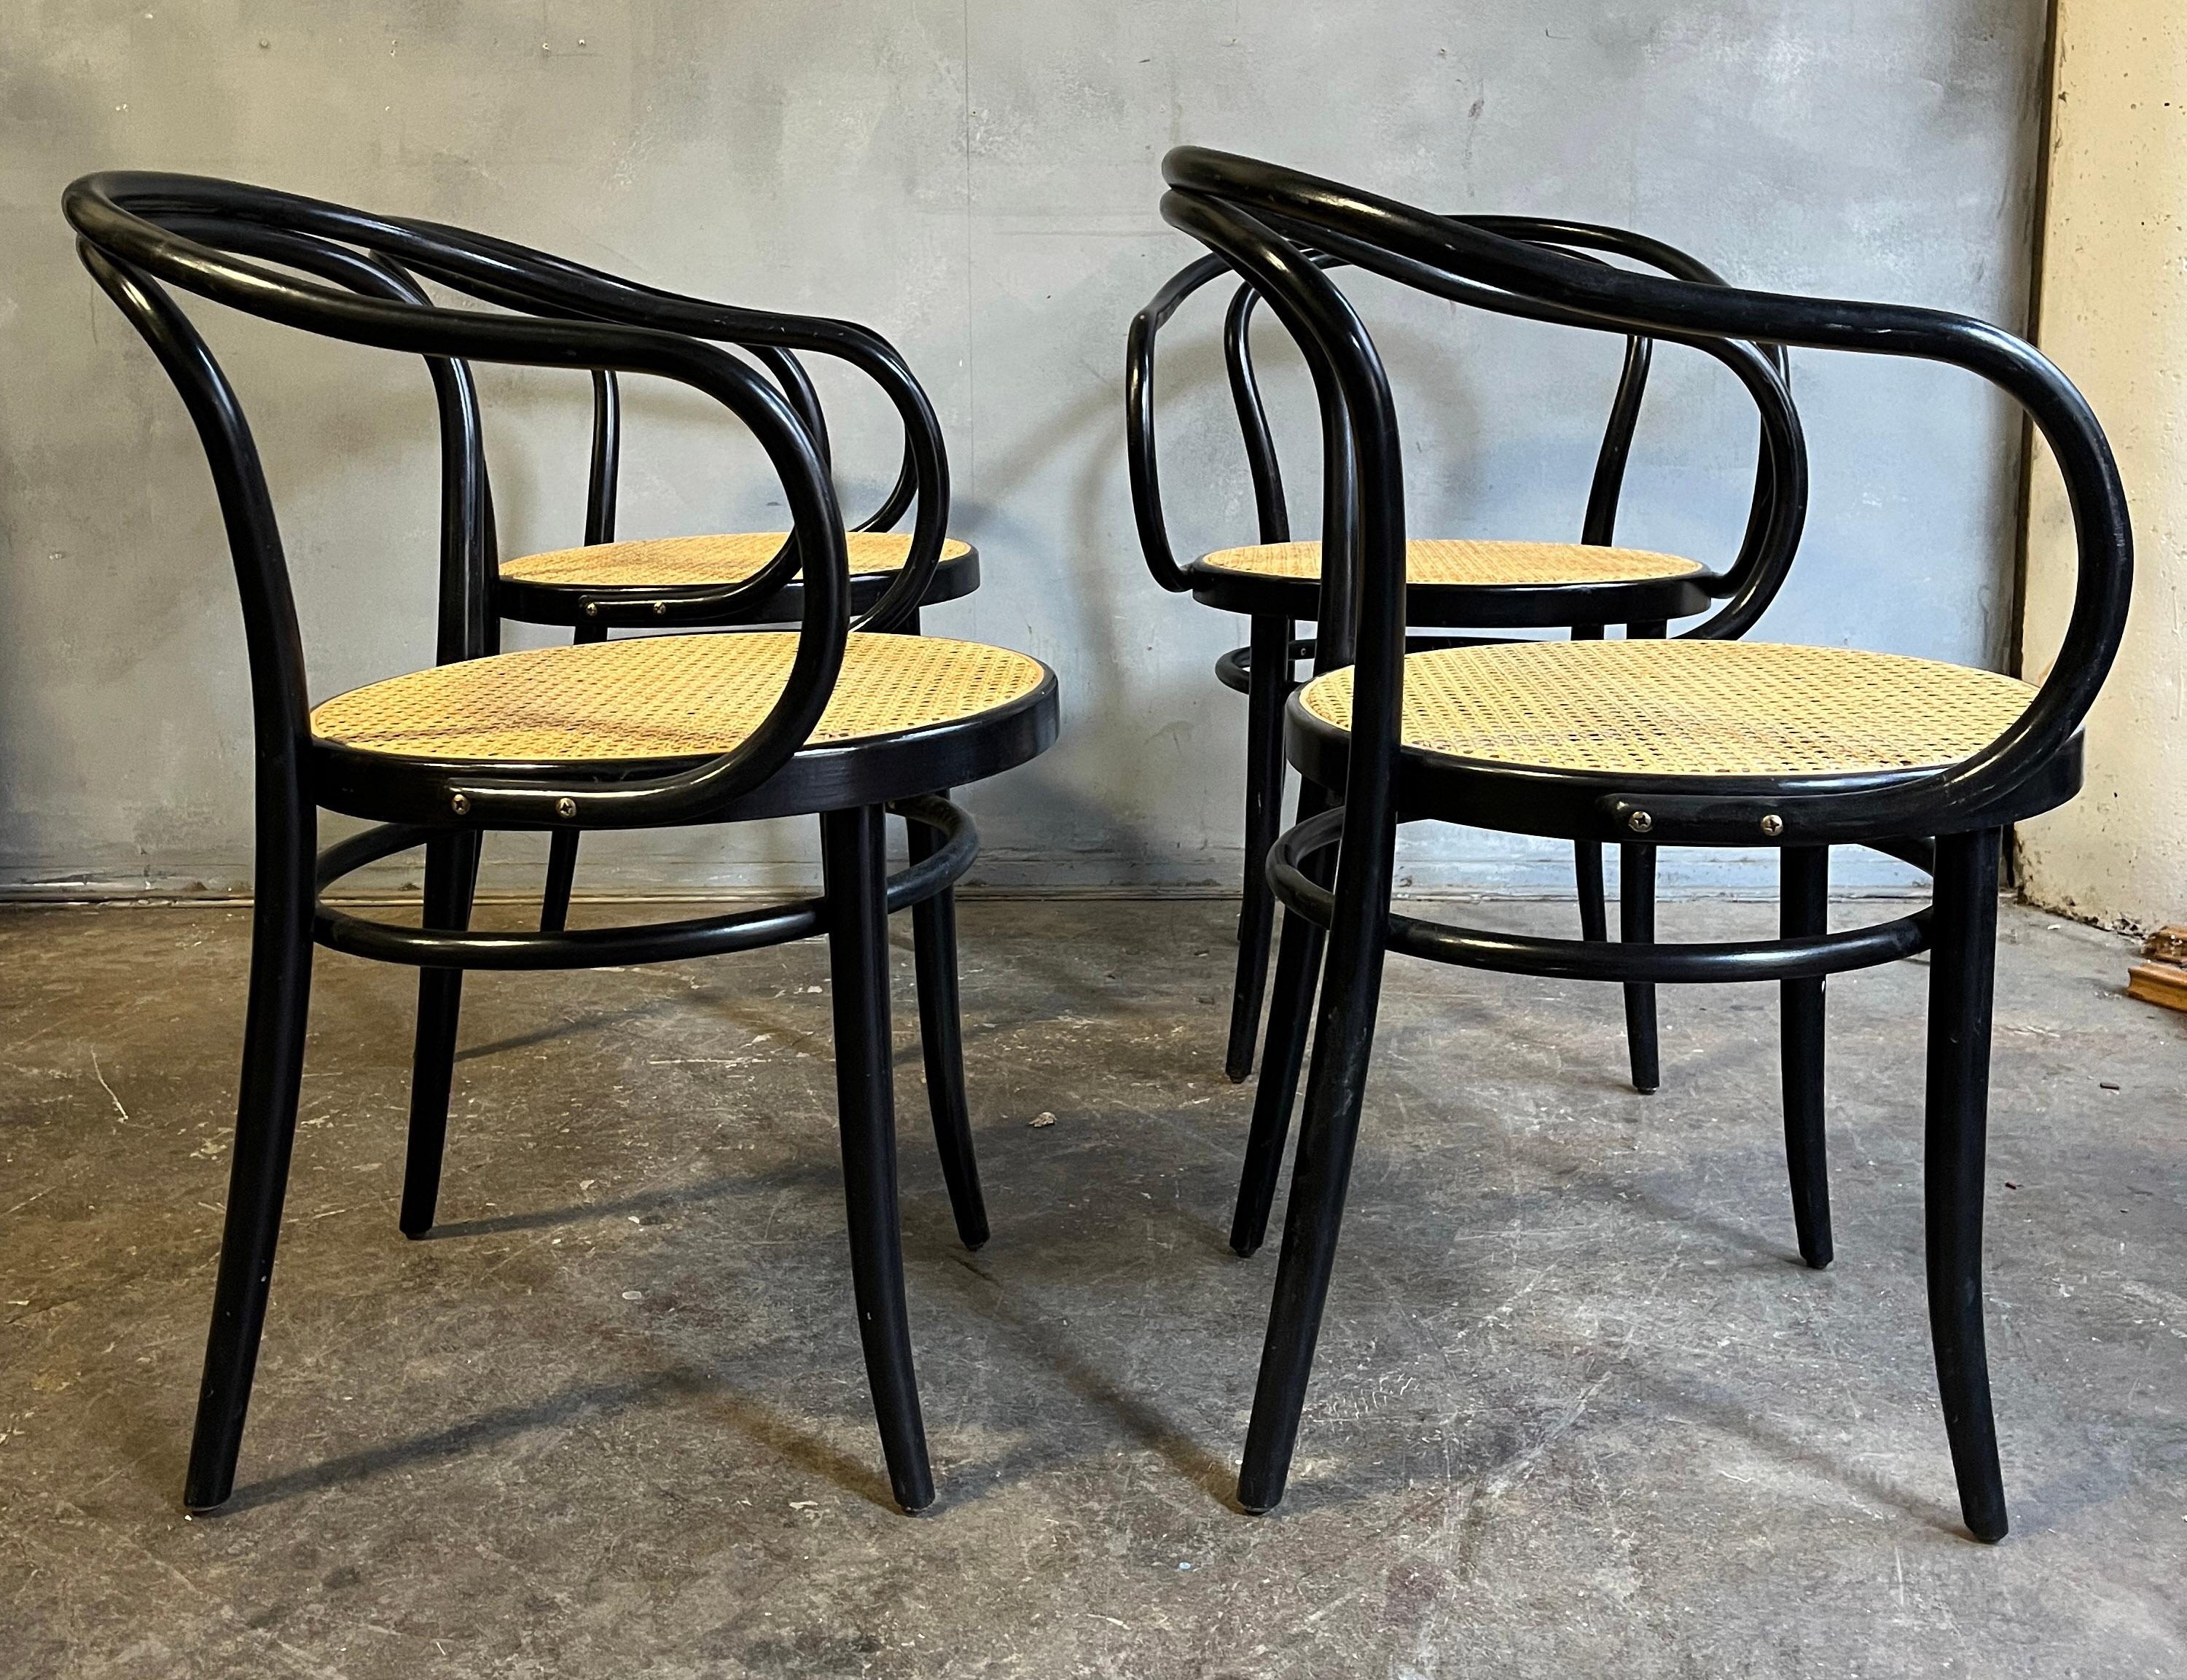 Cane Midcentury Black No.209 Thonet Chairs, 1980s (set of 4)